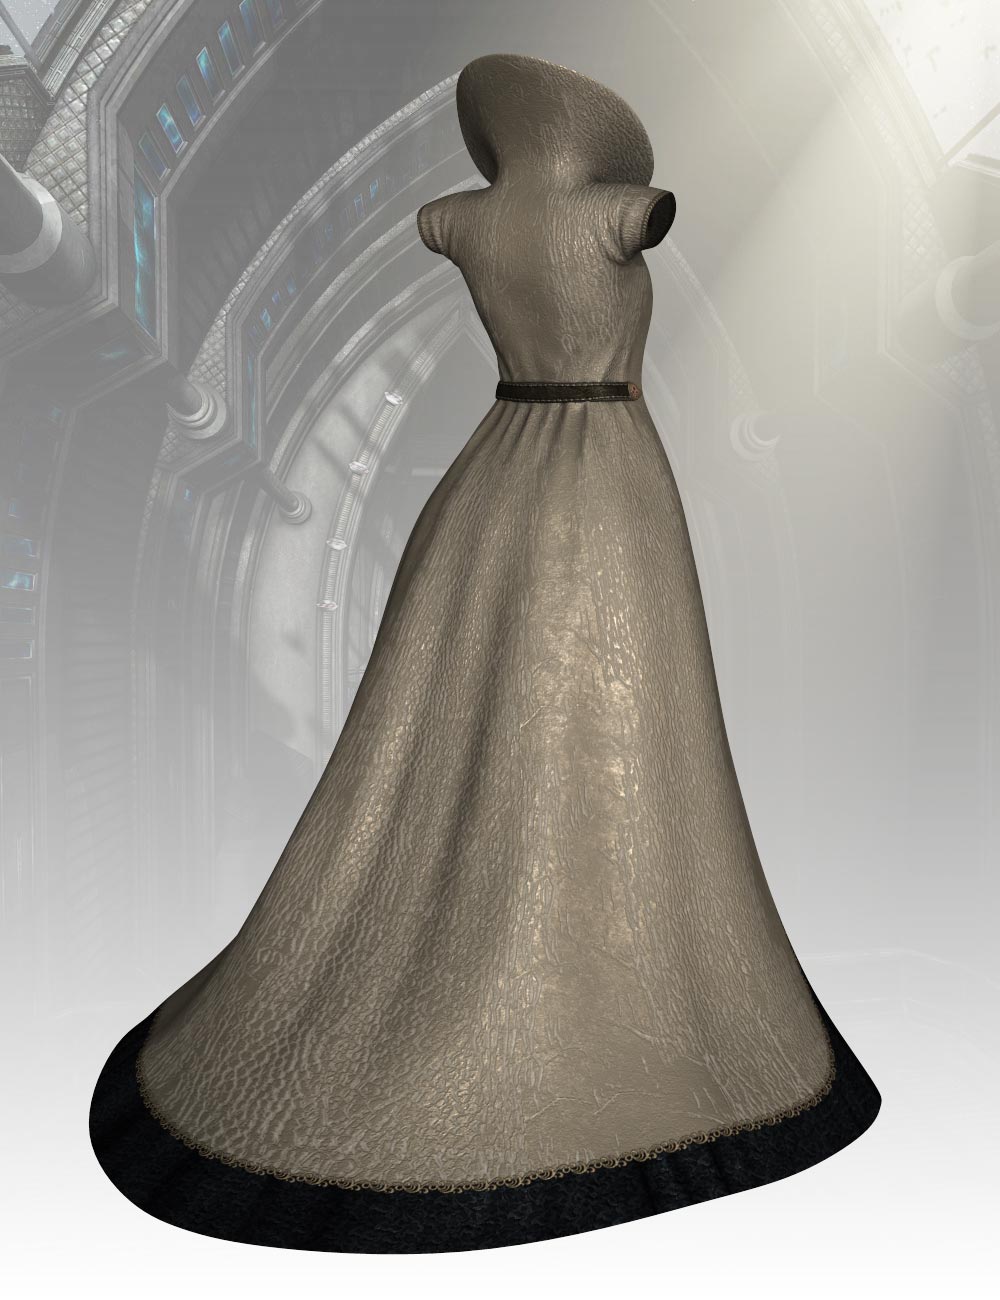 Andromeda for GIS Empress by: Sarsa, 3D Models by Daz 3D